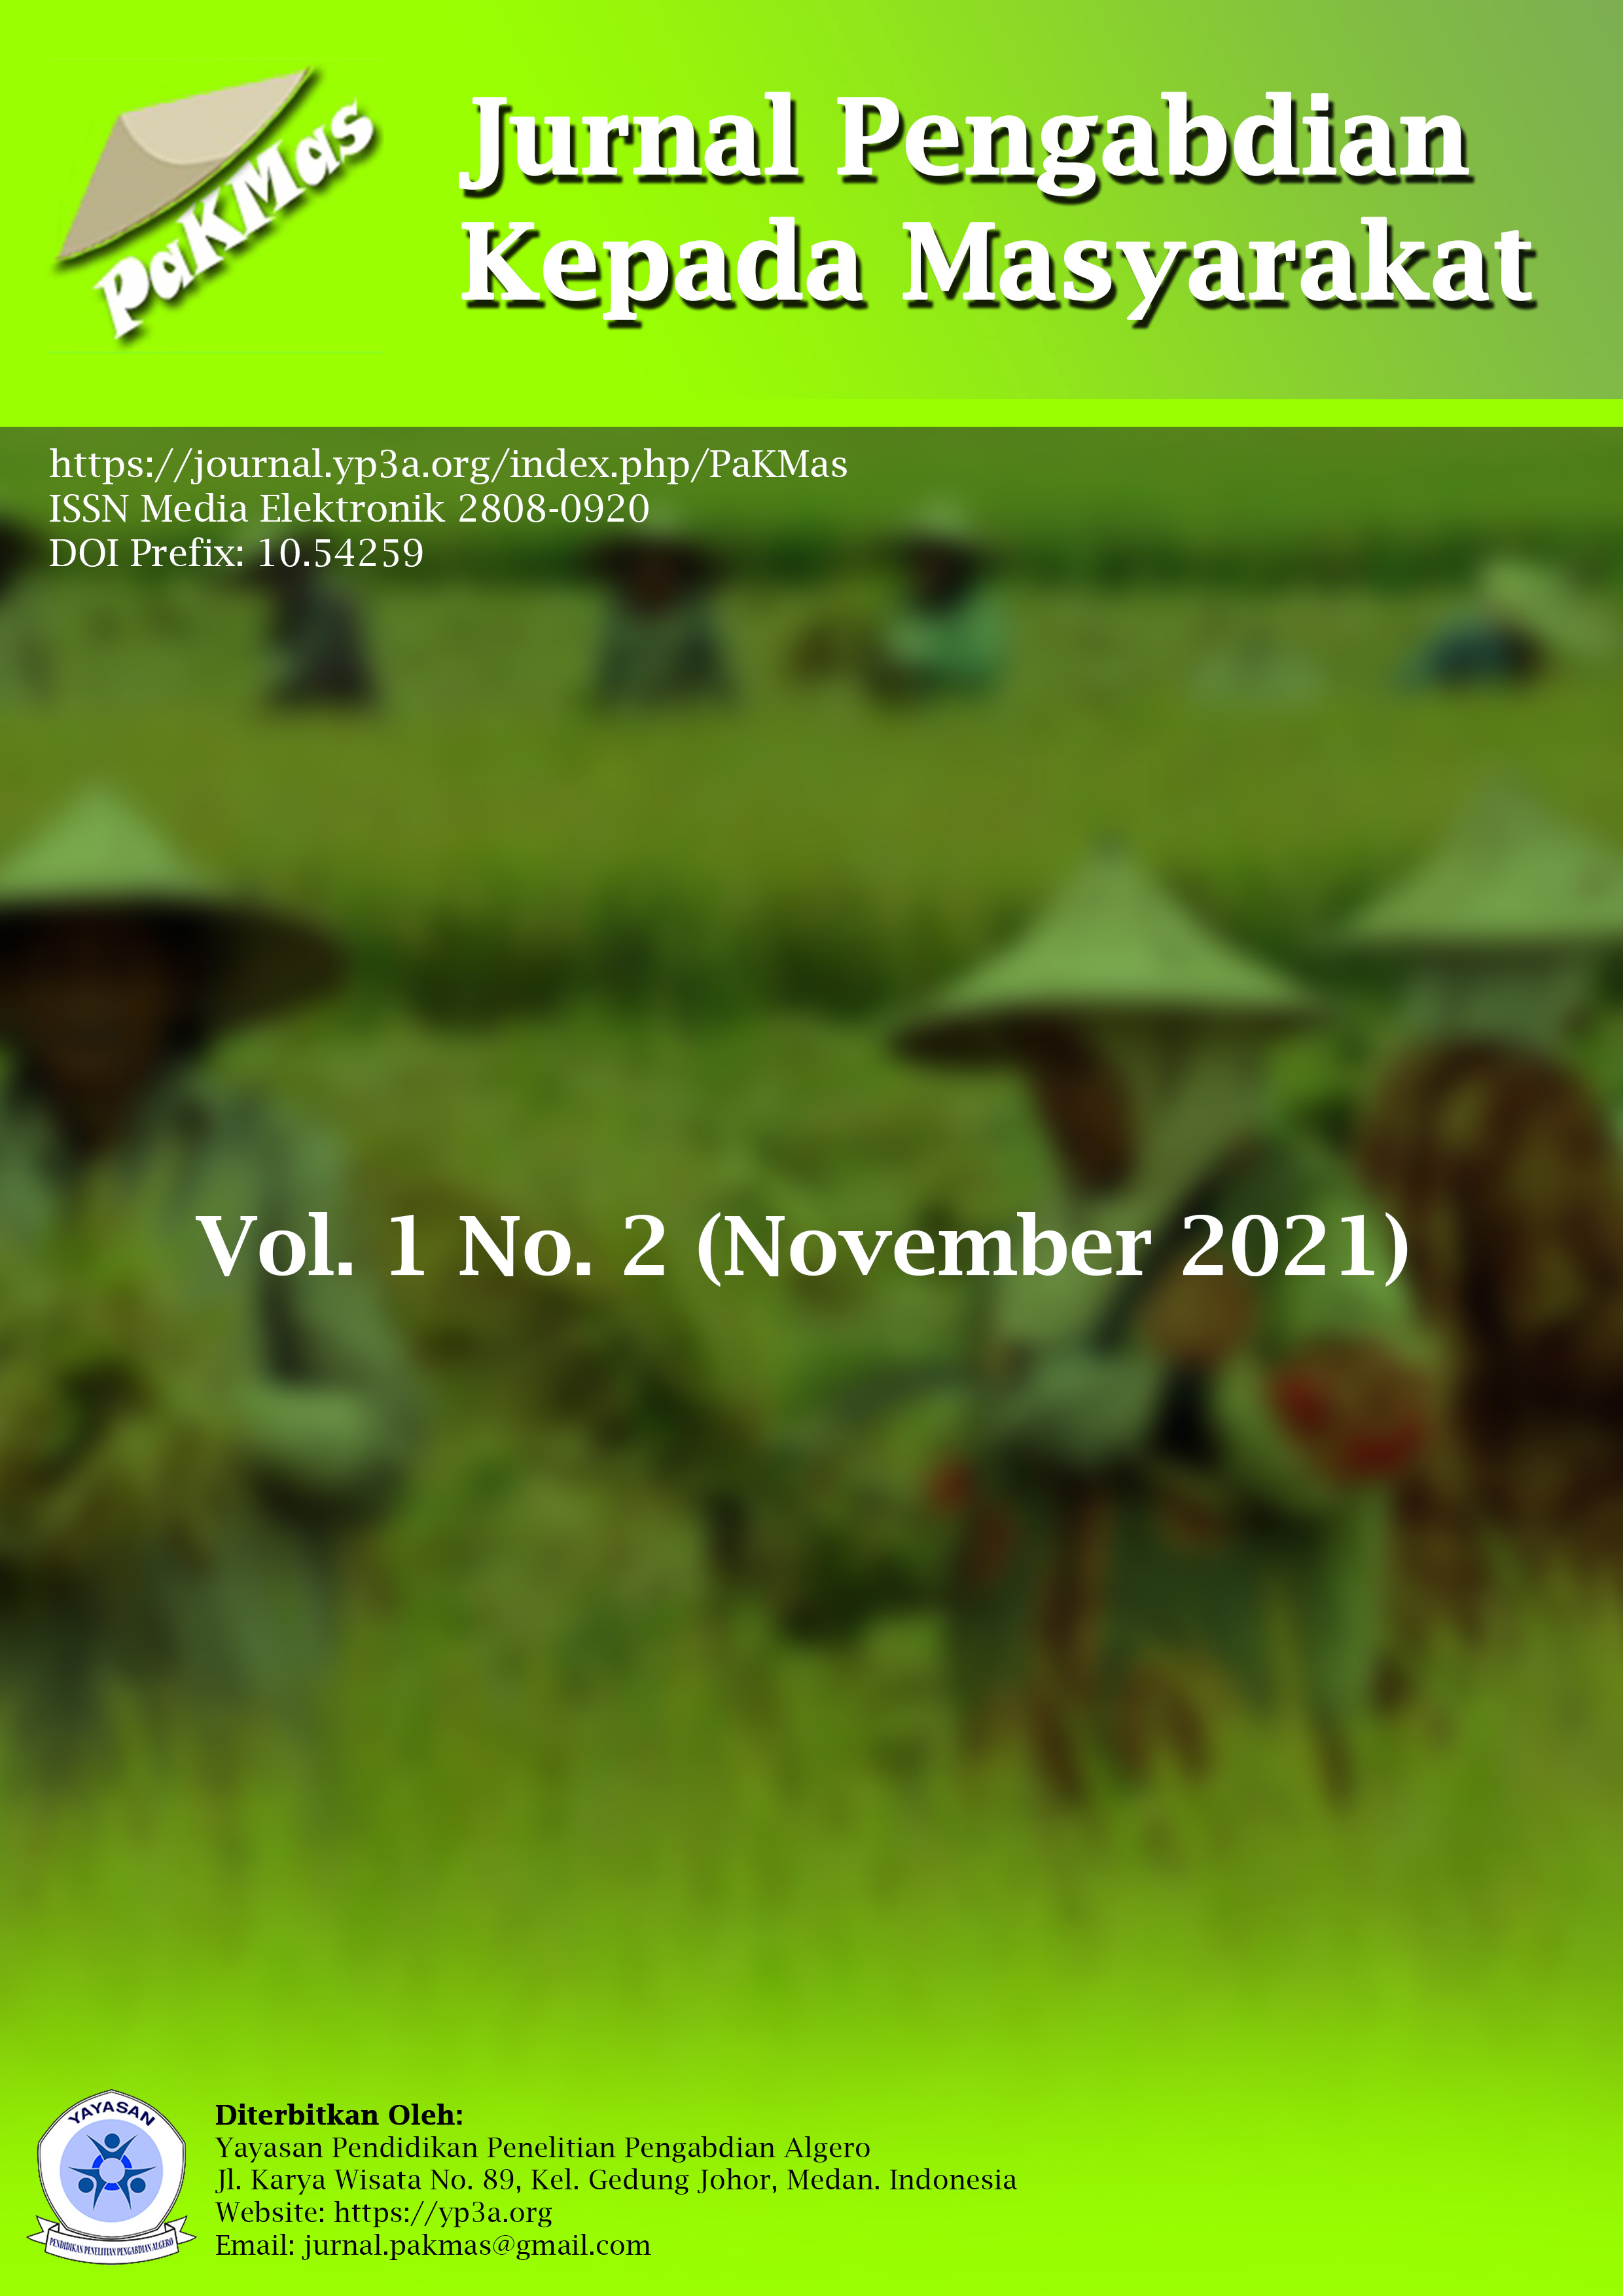 					View Vol. 1 No. 2 (2021): November 2021
				